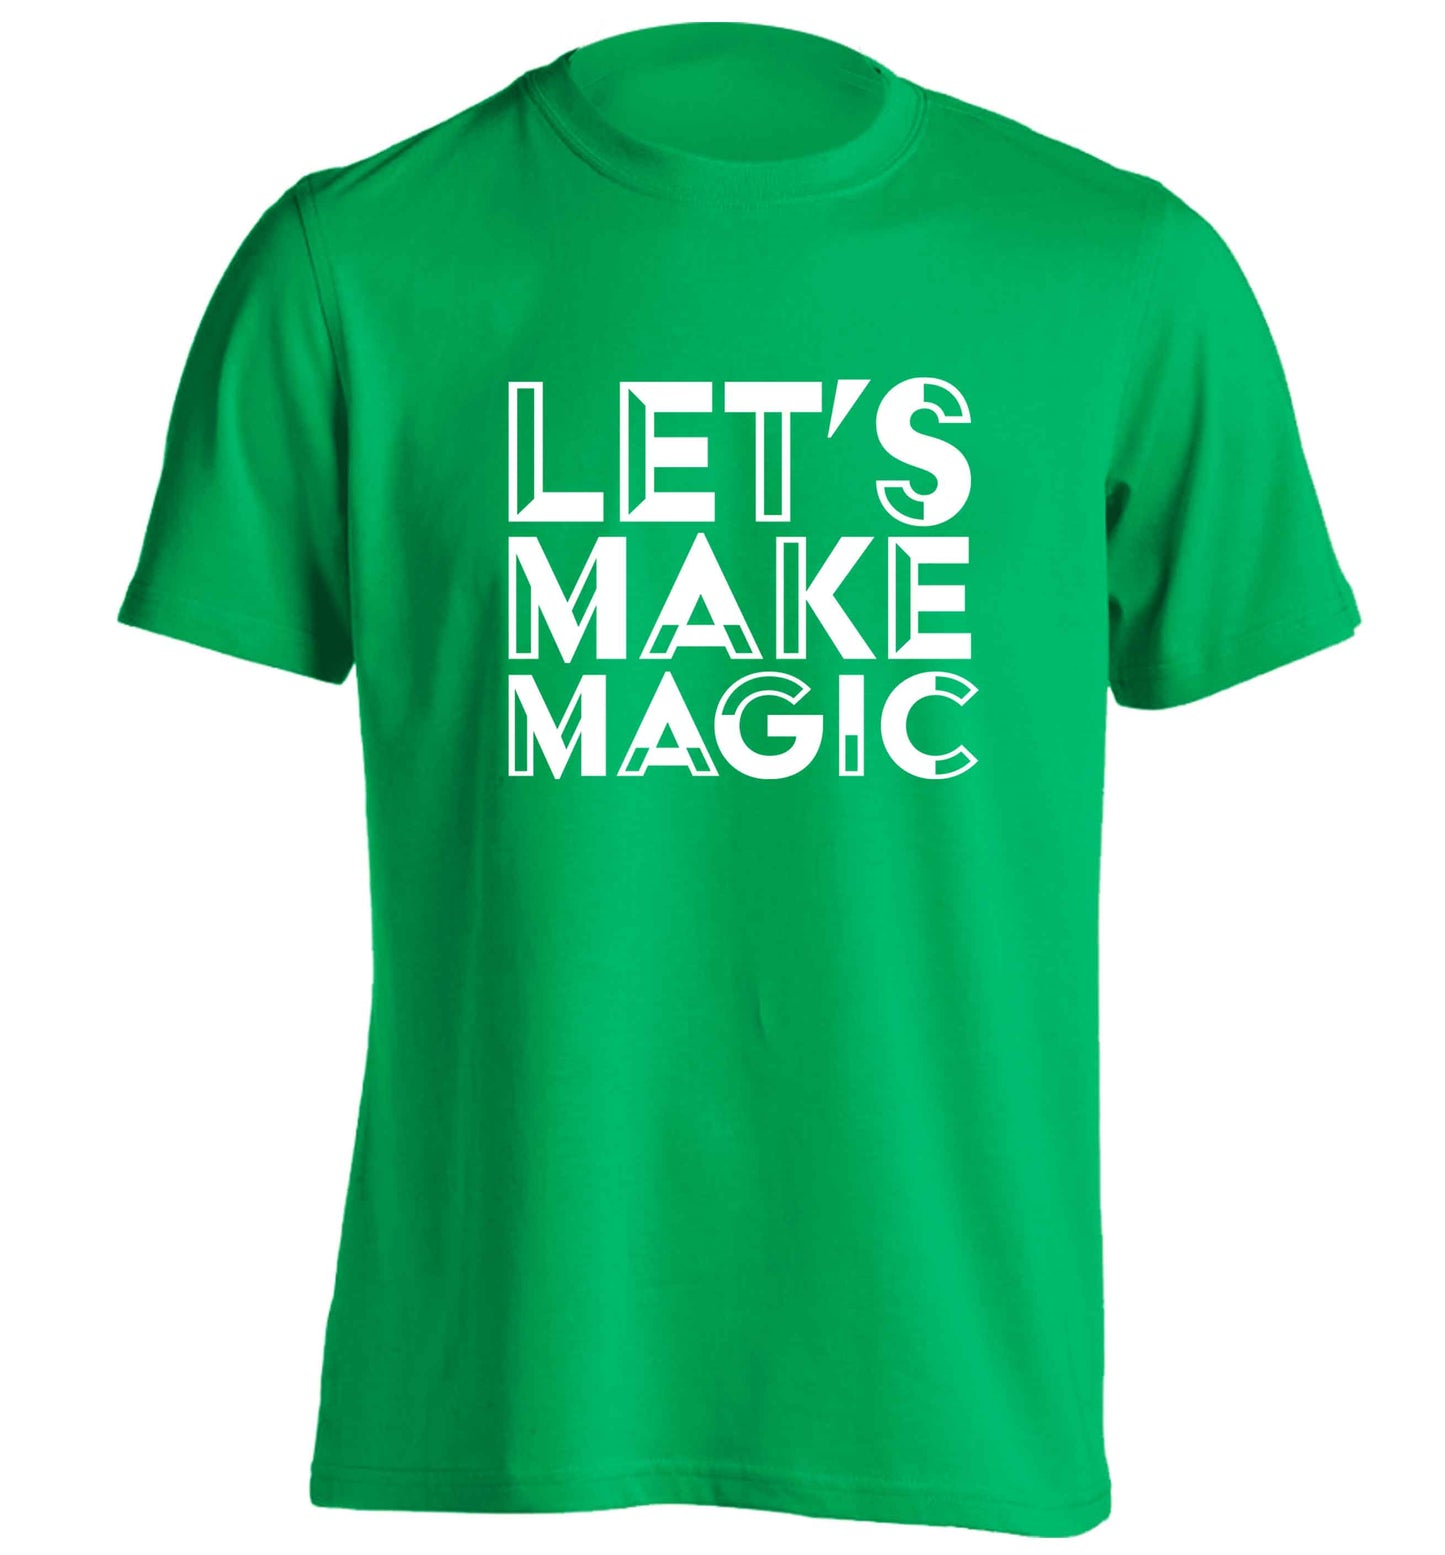 Let's make magic adults unisex green Tshirt 2XL